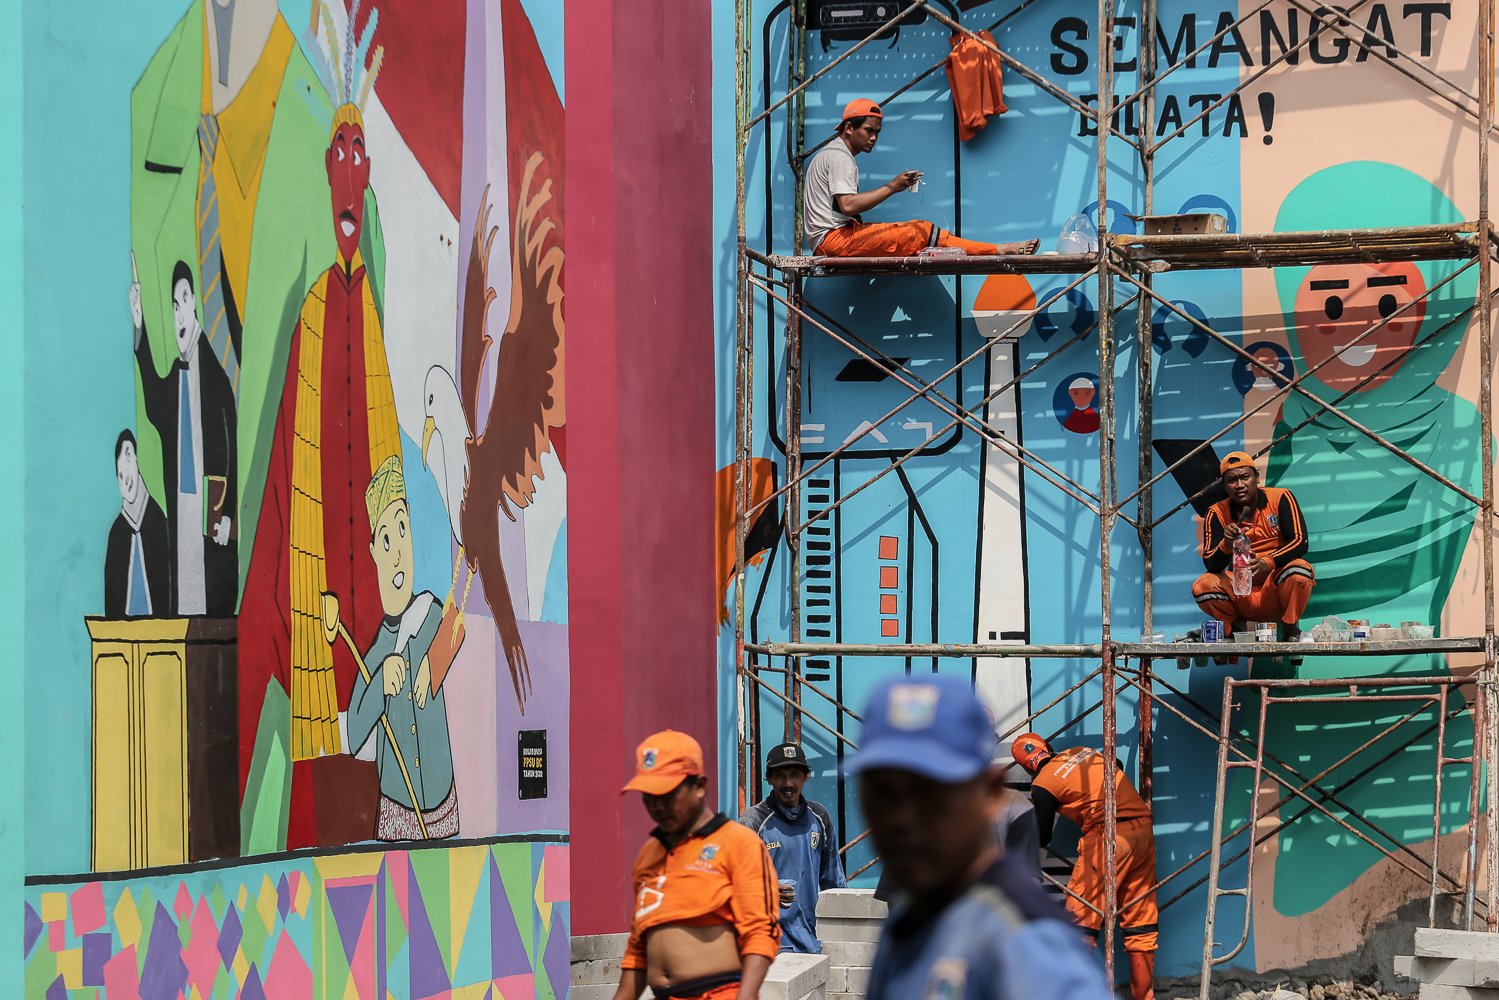 Sejumlah petugas Penanganan Prasarana & Sarana Umum (PPSU) menyelesaikan pembuatan mural di Kampung Gembira Gembrong, Jakarta Timur, Senin (19/9). Menurut data Pemprov DKI Jakarta pembangunan 138 unit rumah bagi korban kebakaran di permukiman Kampung Gembira Gembrong telah mencapai 90 persen dan siap dihuni kembali pada akhir September mendatang.